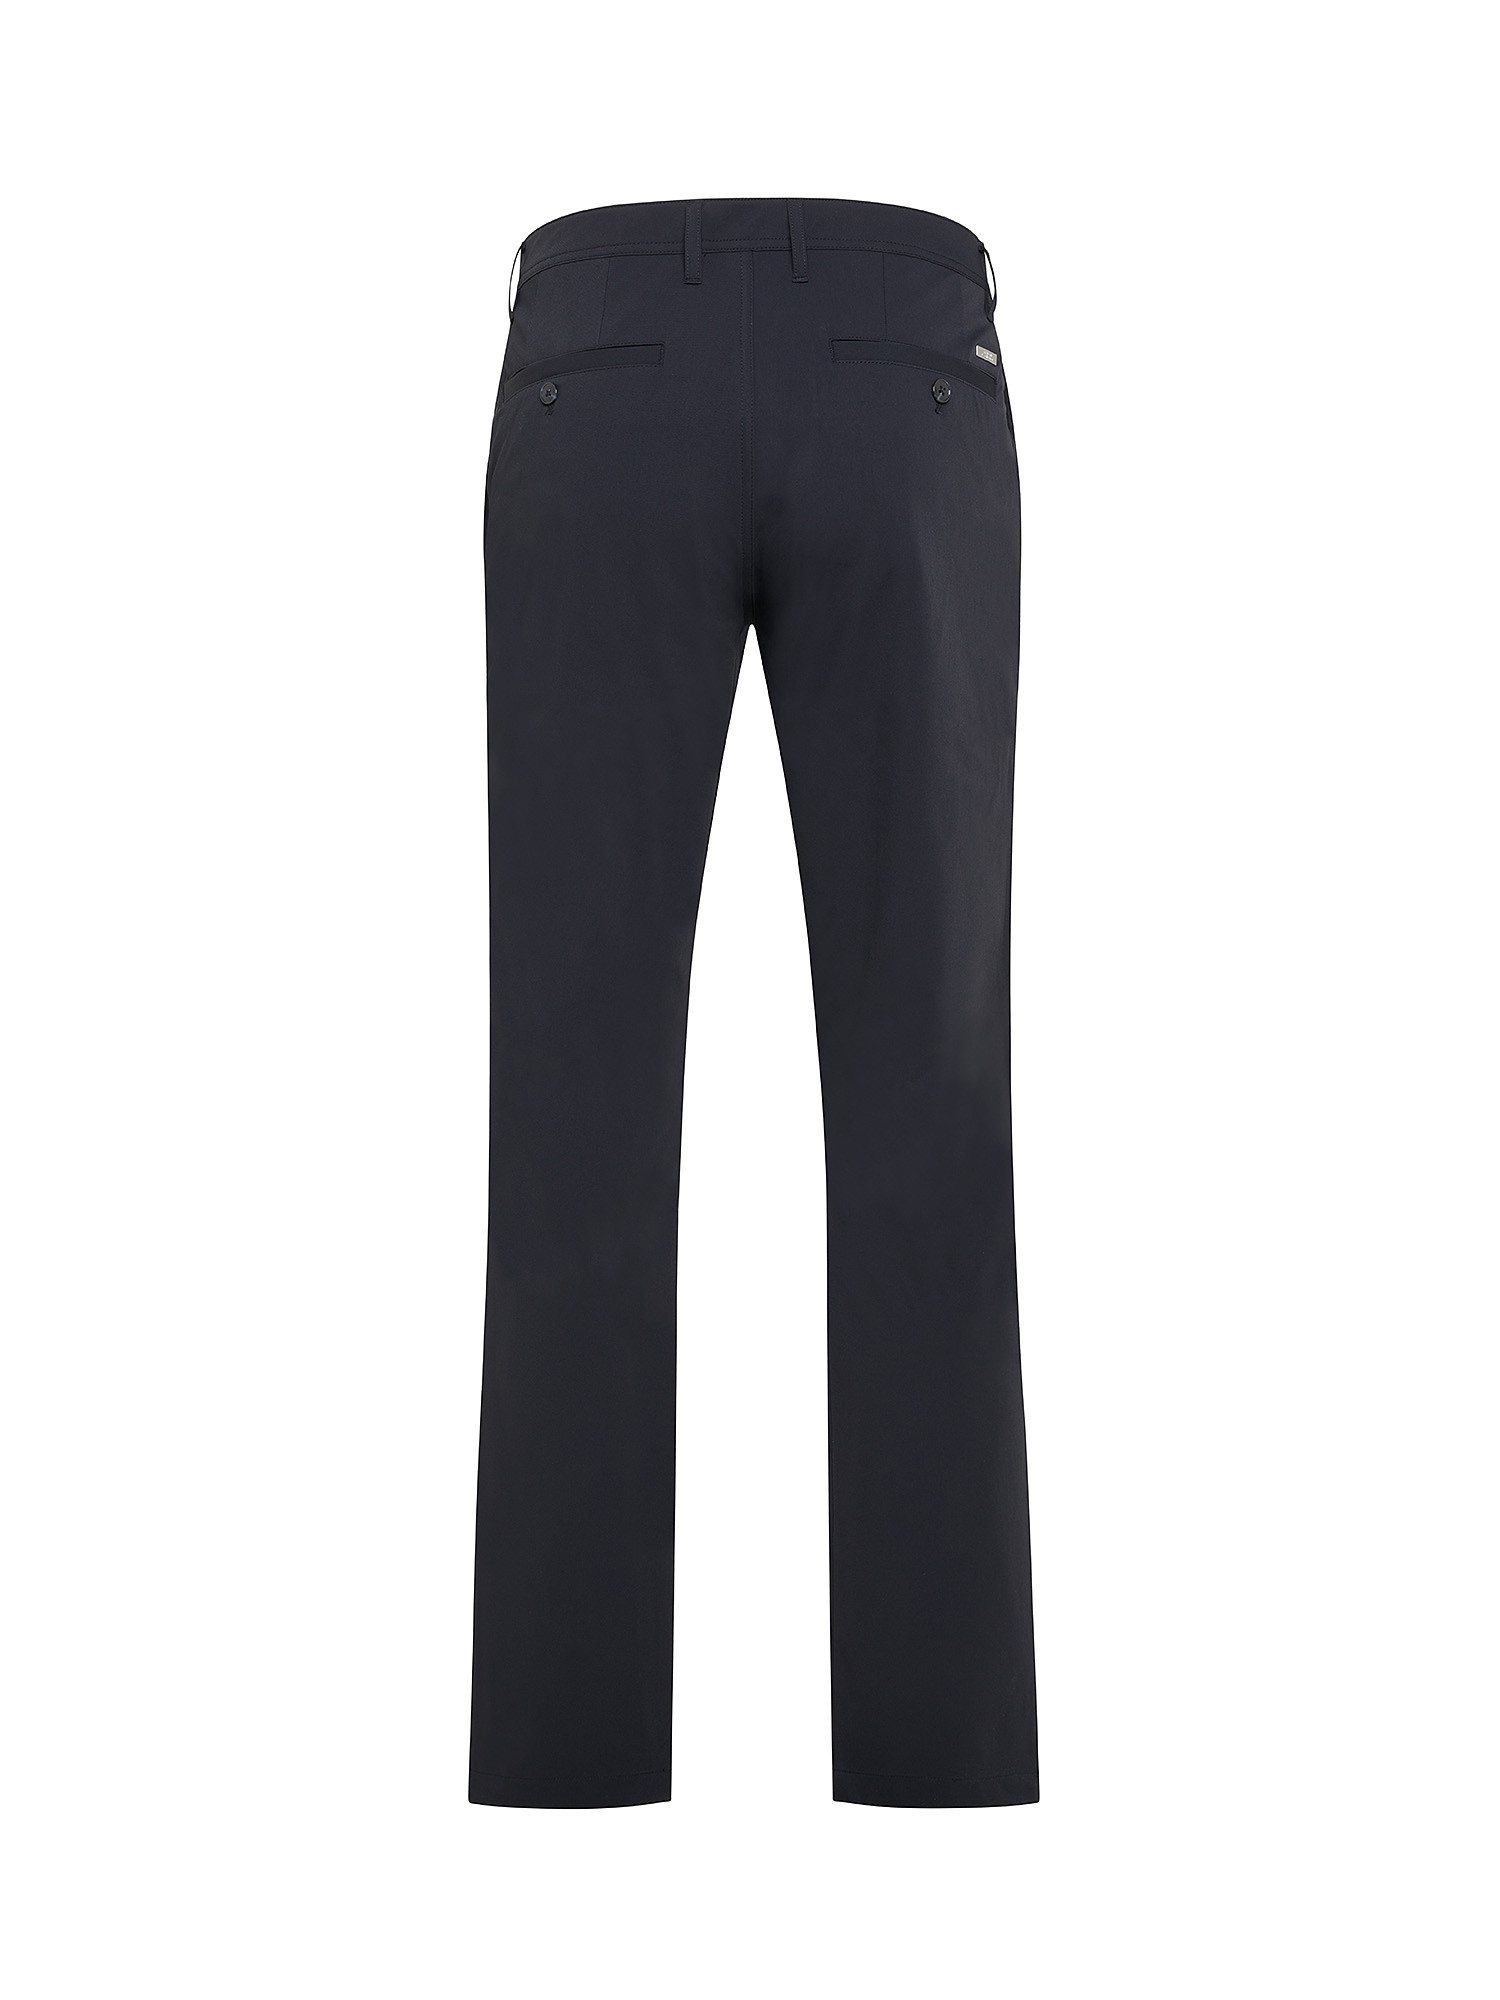 Armani Exchange - Pantaloni in cotone, Blu scuro, large image number 1